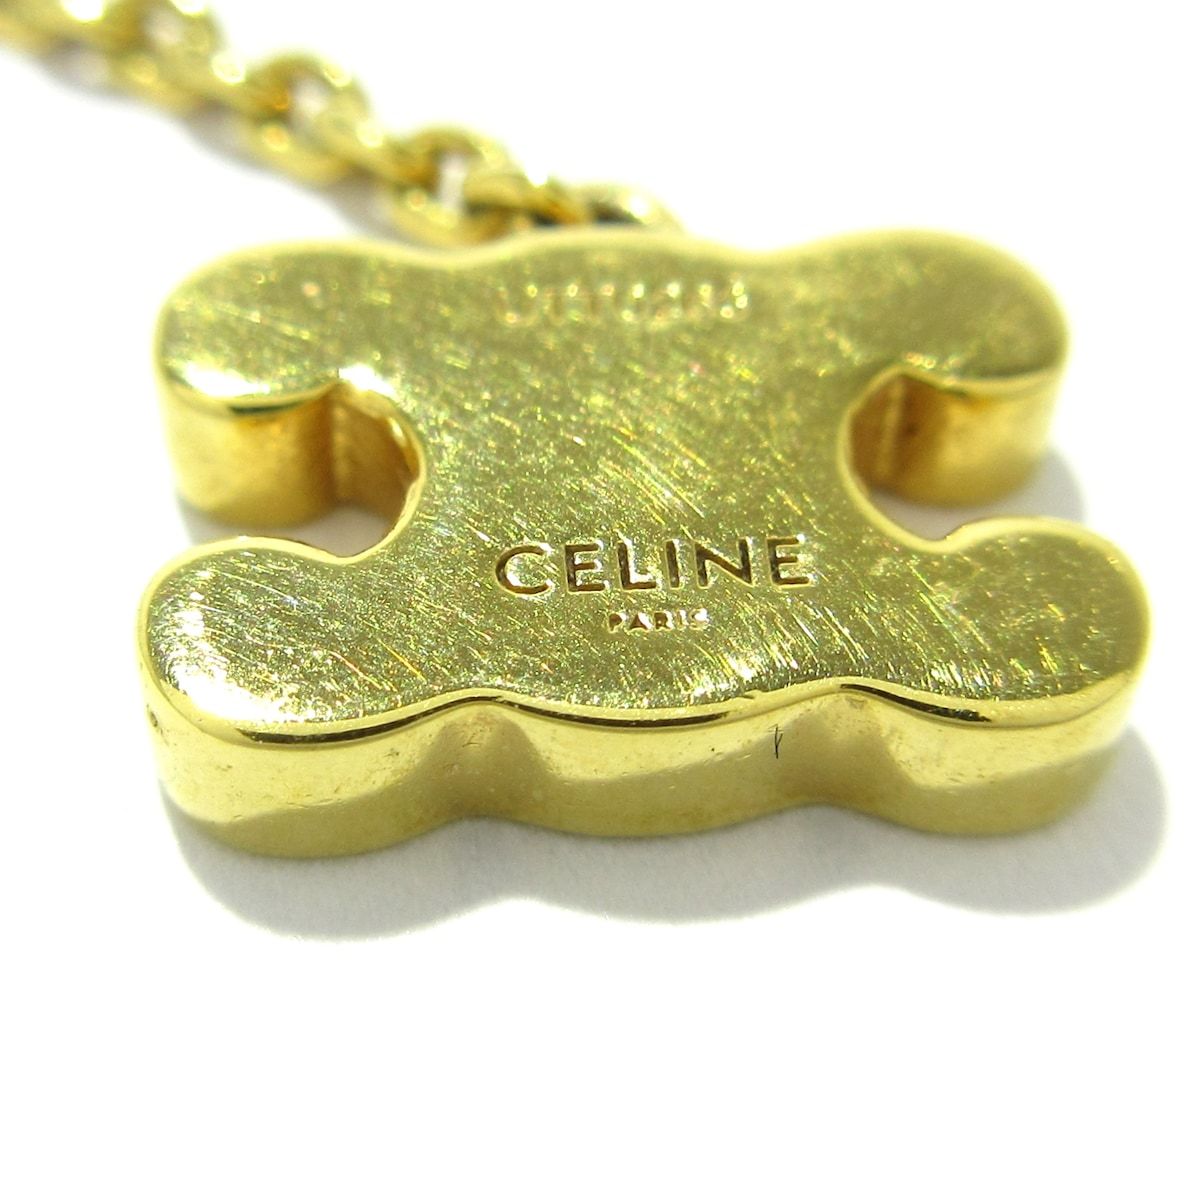 CELINE(セリーヌ) ピアス - 金属素材×ラインストーン ゴールド×シルバー